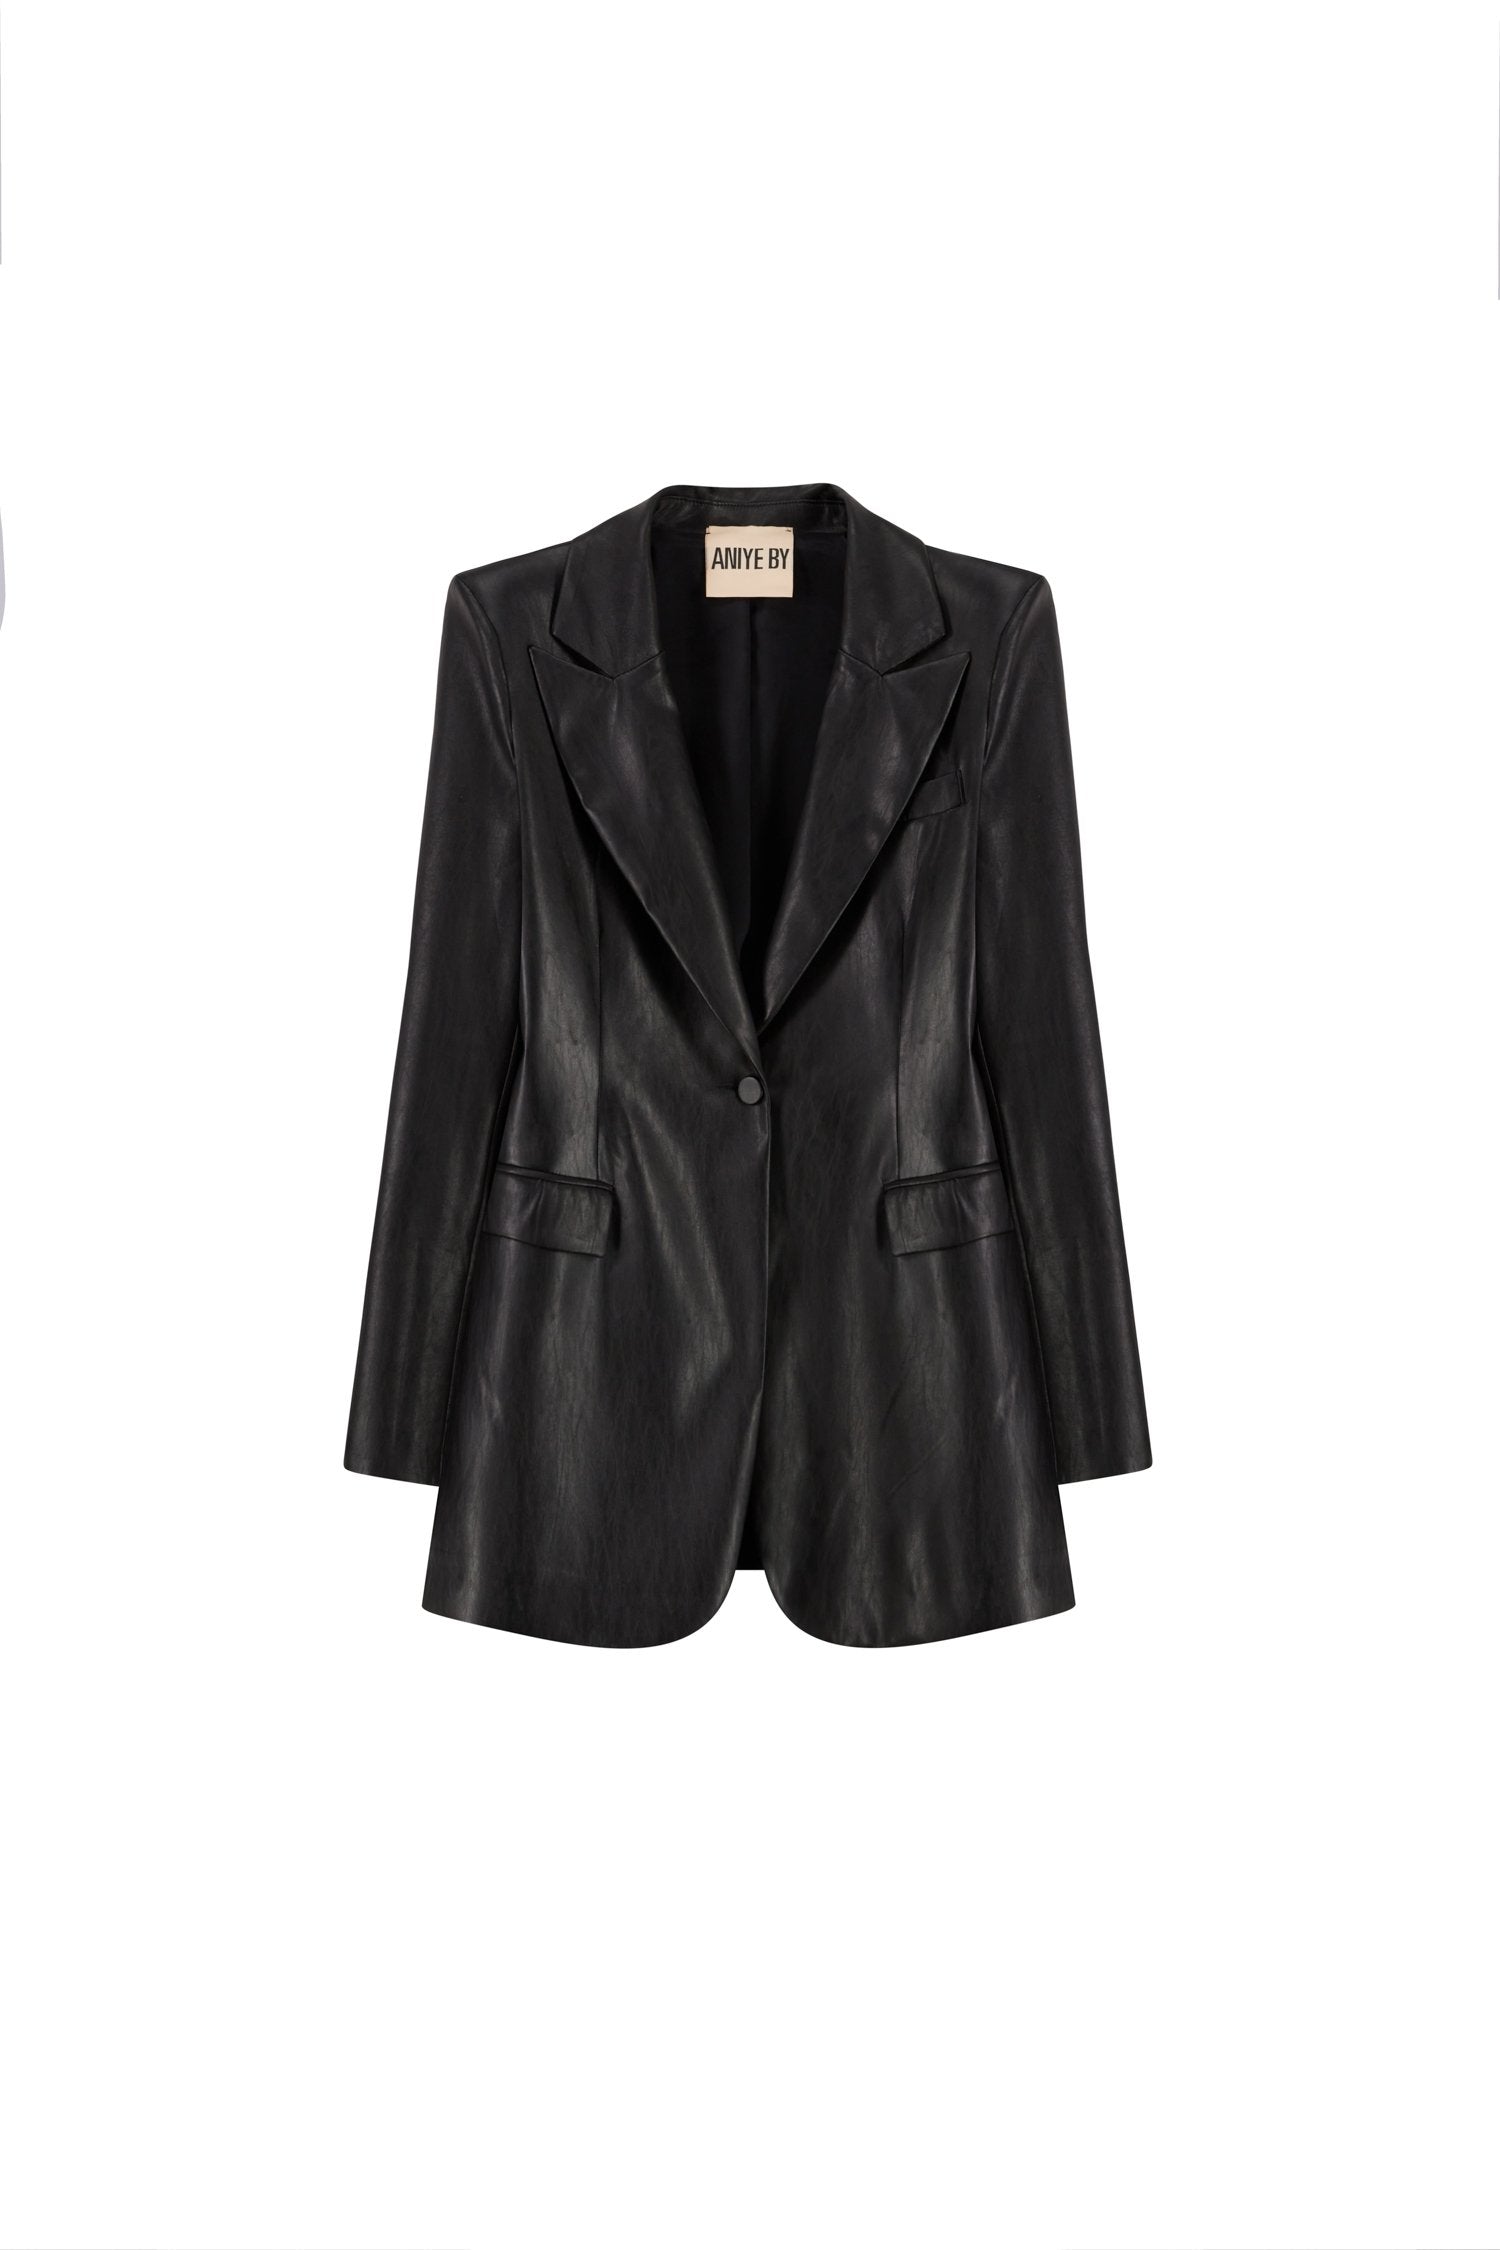 Faux leather black blazer